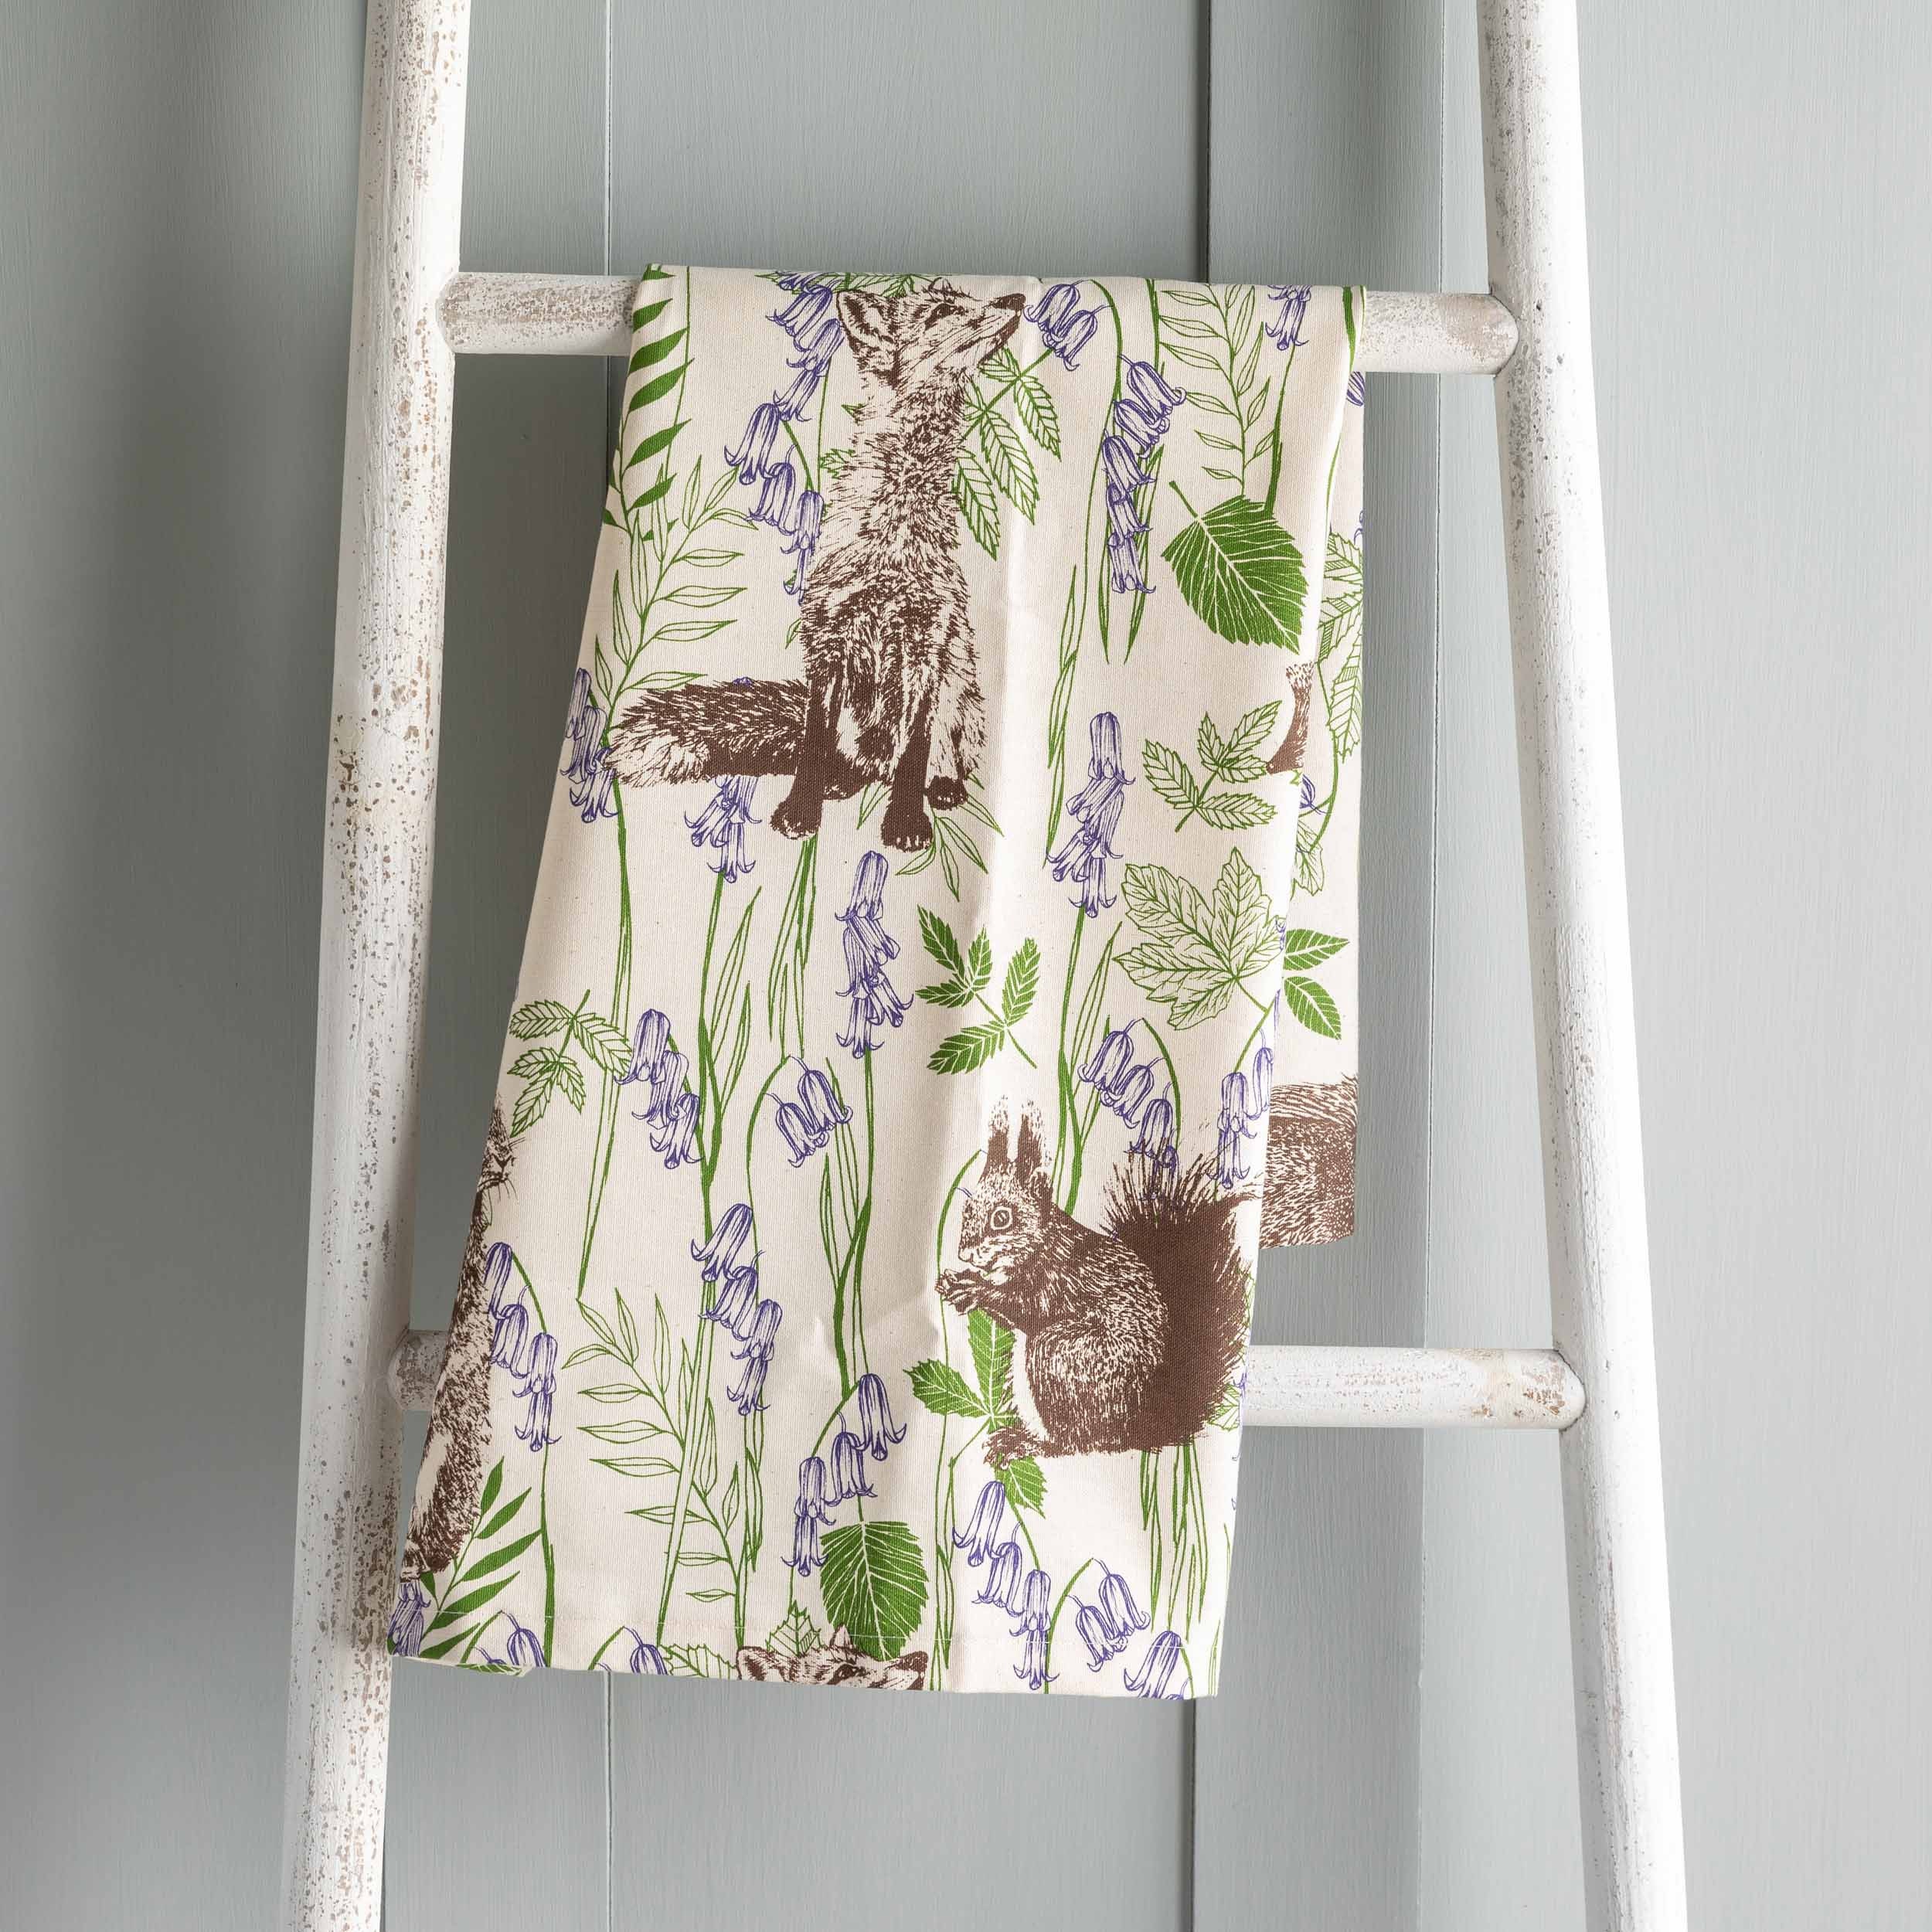 Woodland Kitchen Towel Forest Animals Dish Towel Fairy Magical Forest  Kitchen Decor Hare Rabbit Snake Tea Towel Hostess Gift Kitchenware 